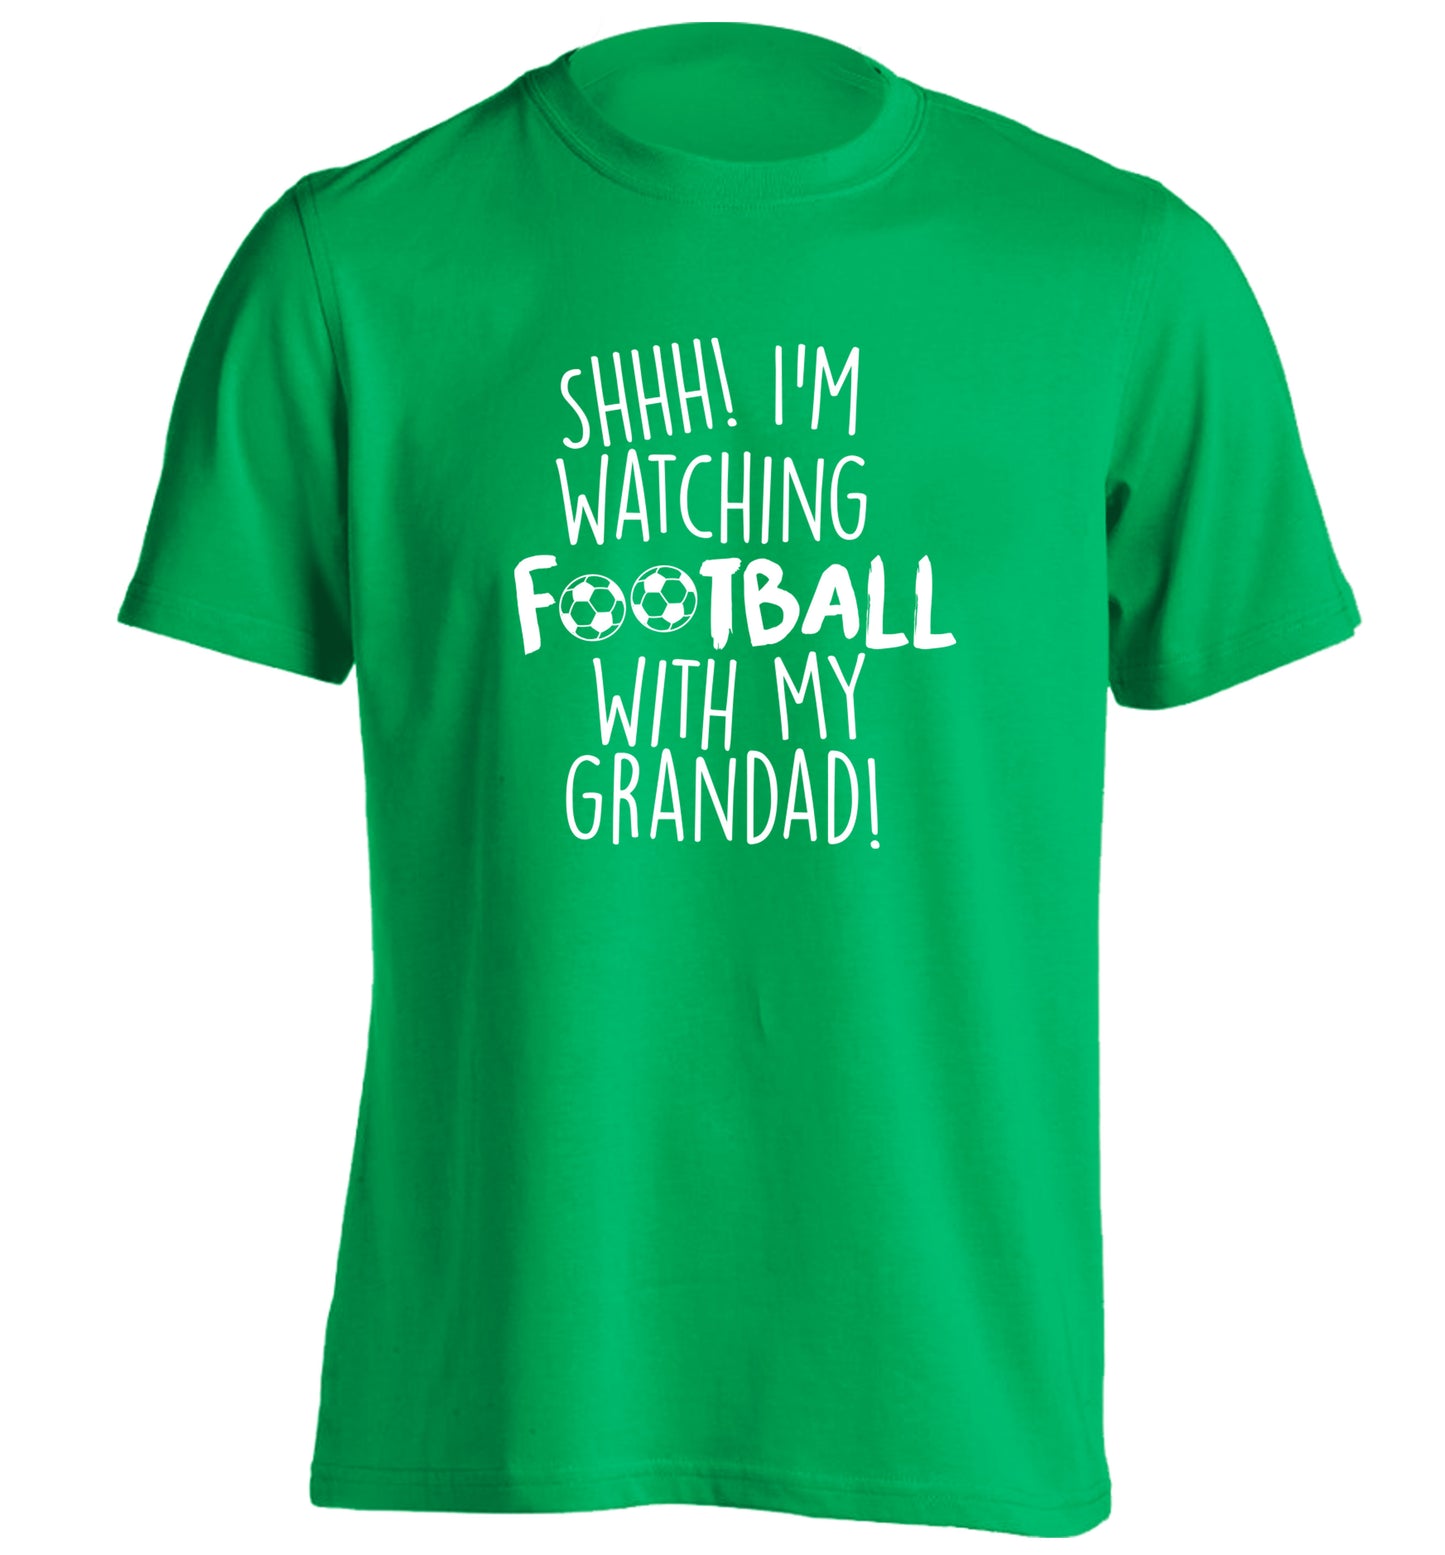 Shhh I'm watching football with my grandad adults unisexgreen Tshirt 2XL